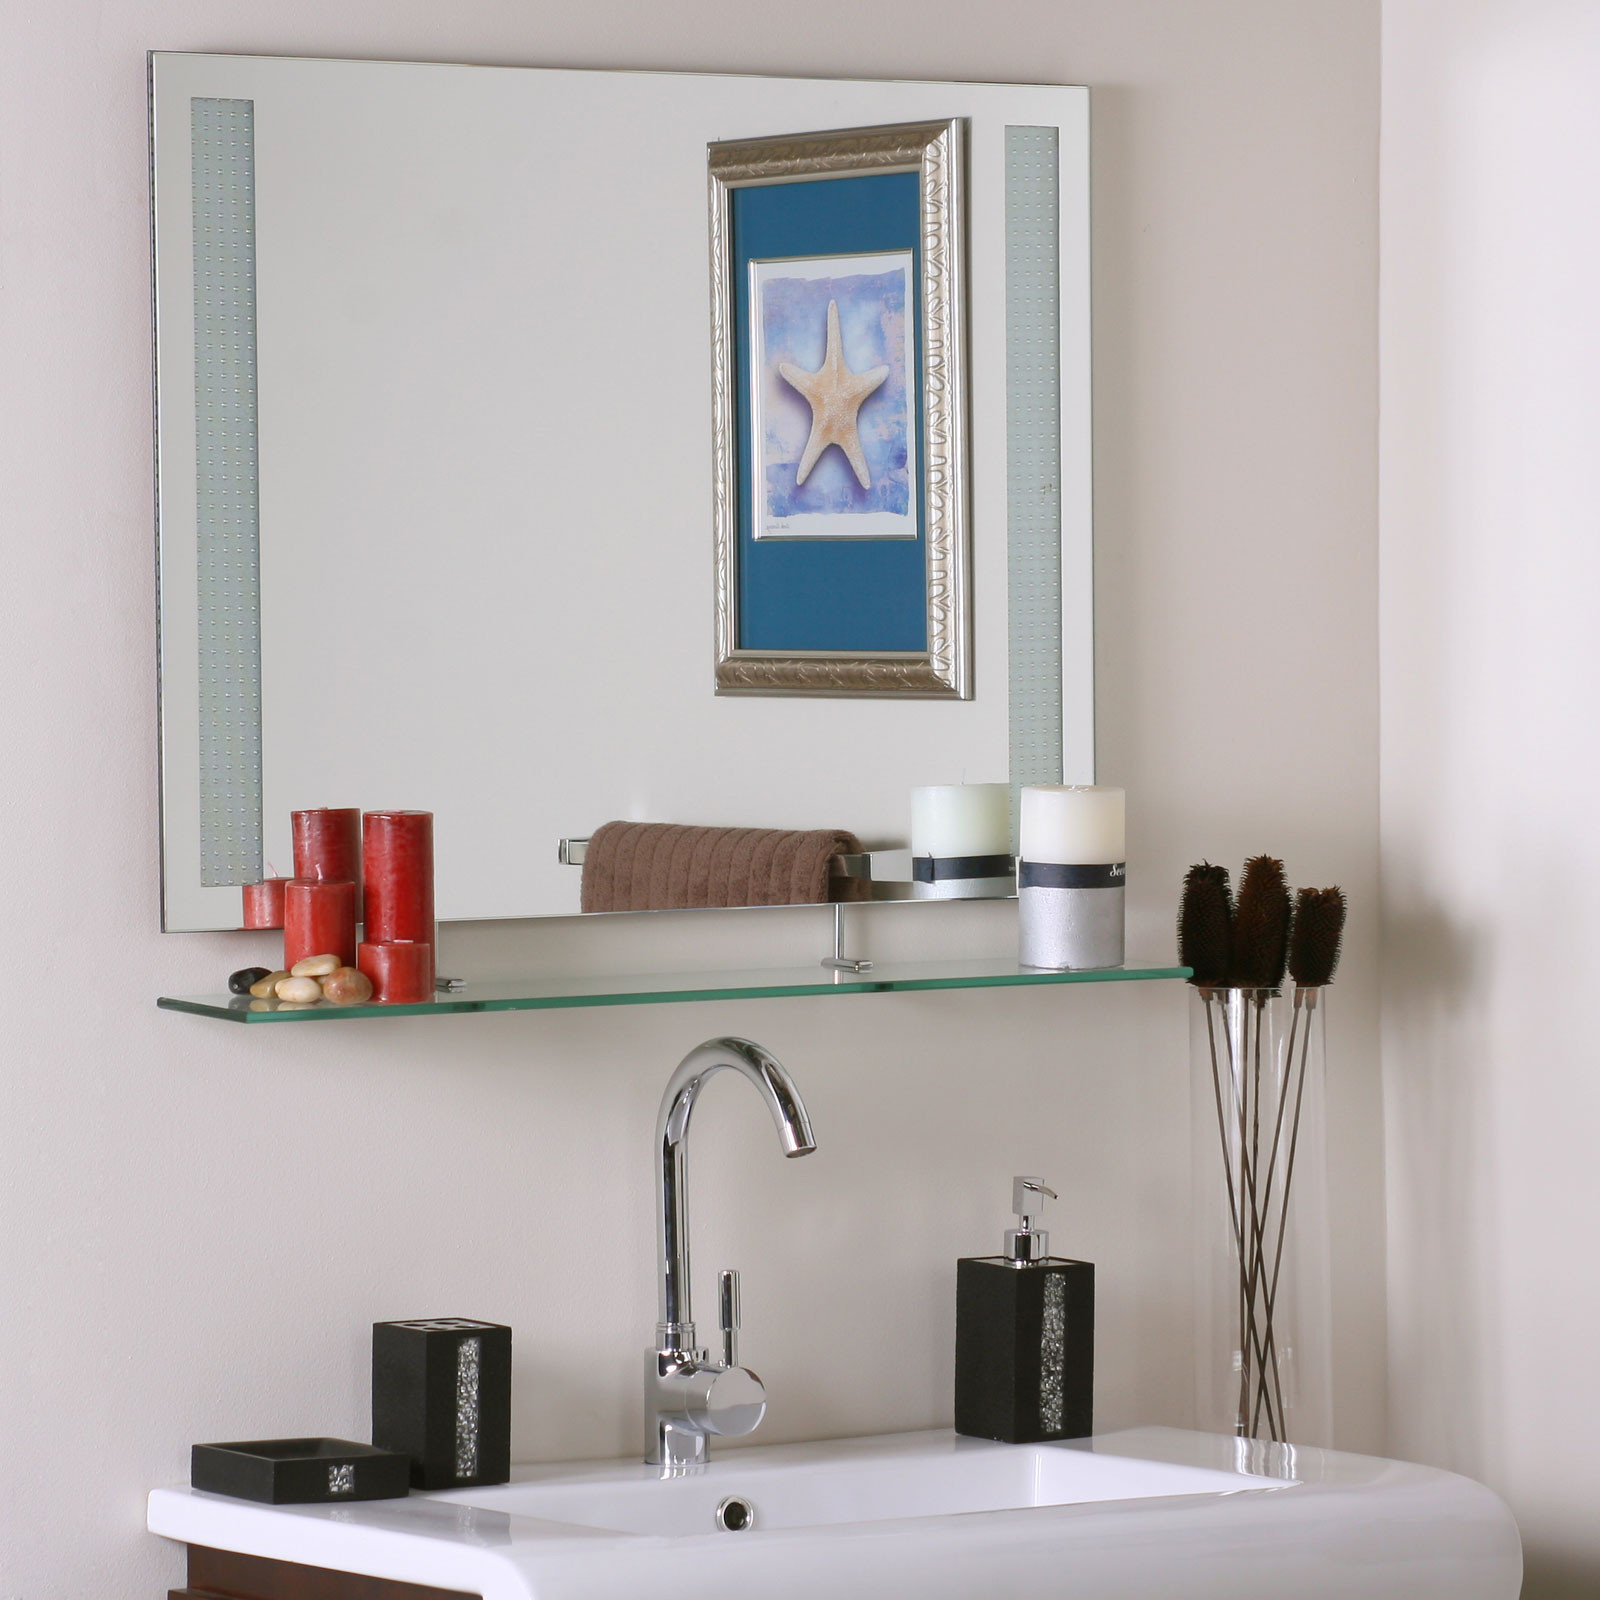 Bathroom Vanity Mirror With Shelf
 Frameless Bathroom Mirror with Shelf in Frameless Mirrors